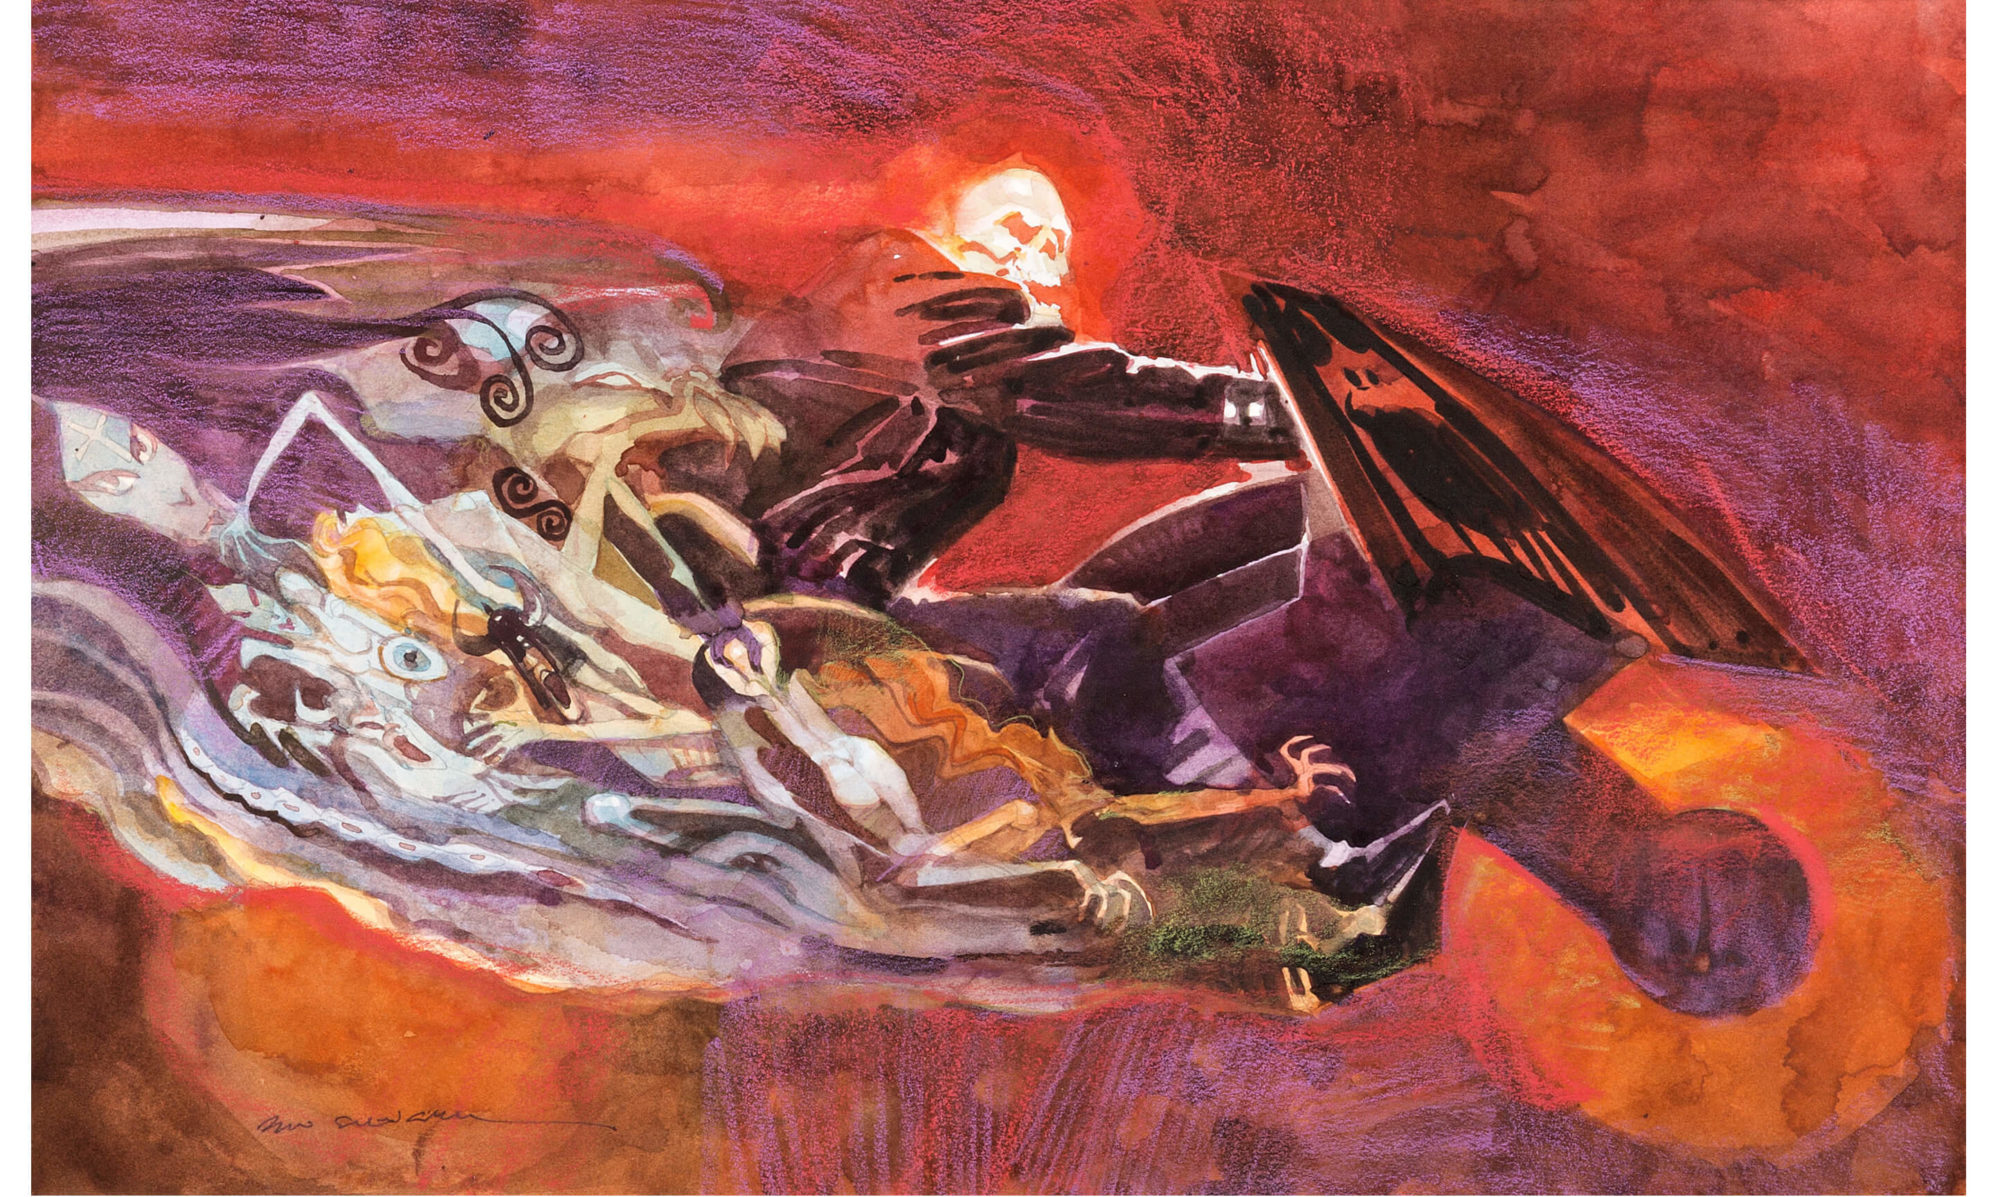 Bill Sienkiewicz - Ghost Rider Study Painting